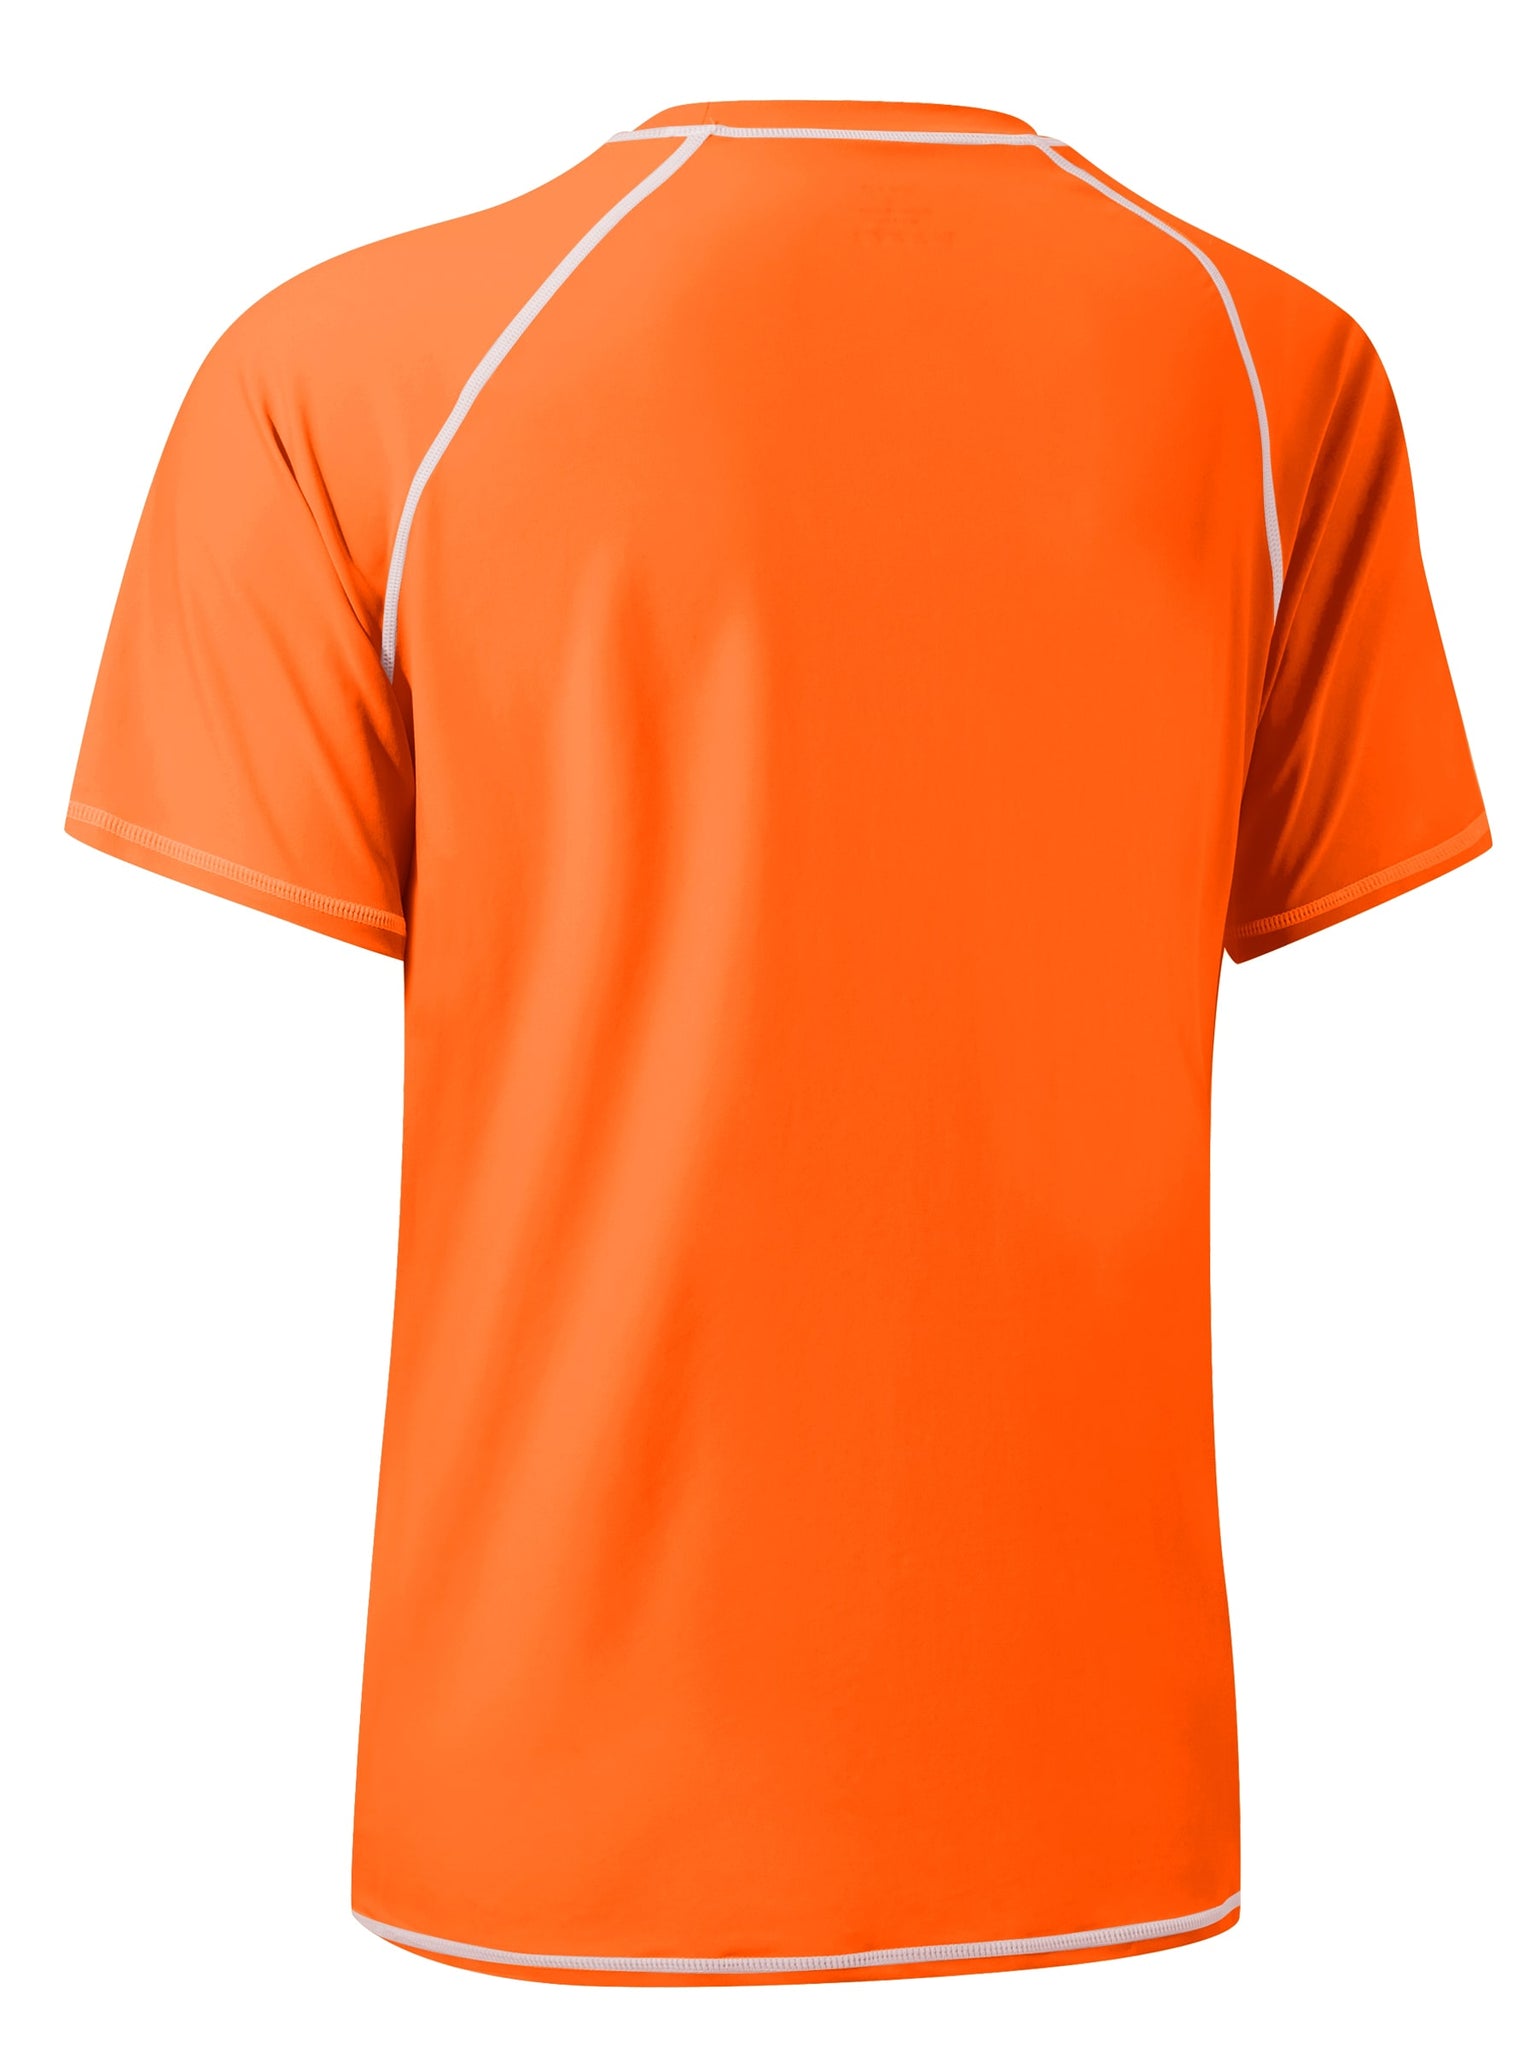 Men's Sun Protection Short Sleeve Shirt_Orange_laydown2